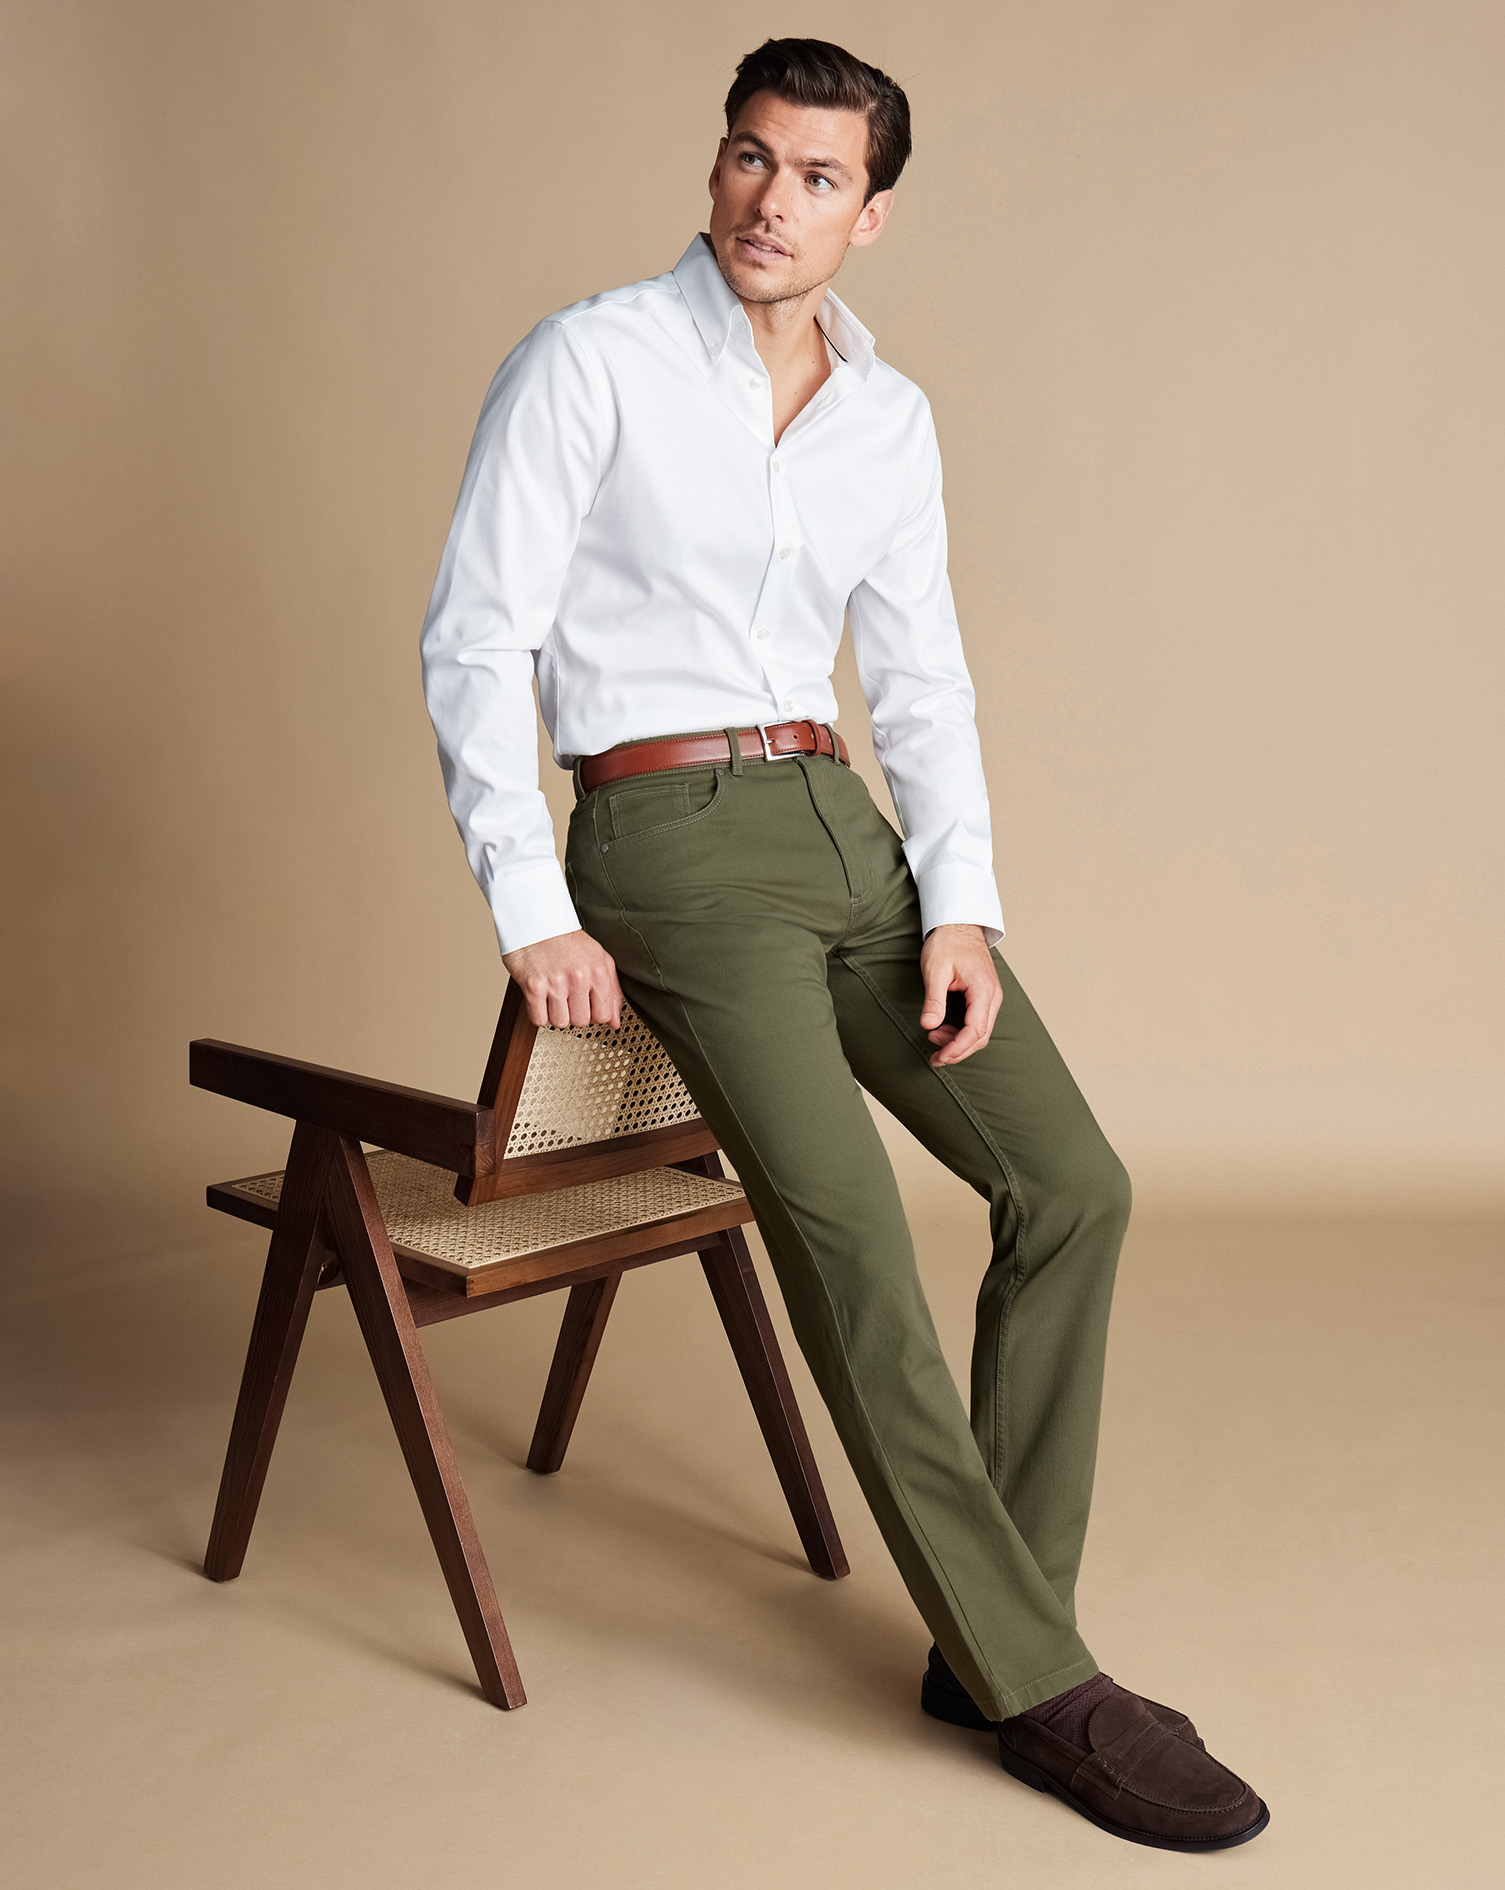 Men's Charles Tyrwhitt Twill 5 Pocket Jeans - Olive Green Size W36 L30 Cotton
